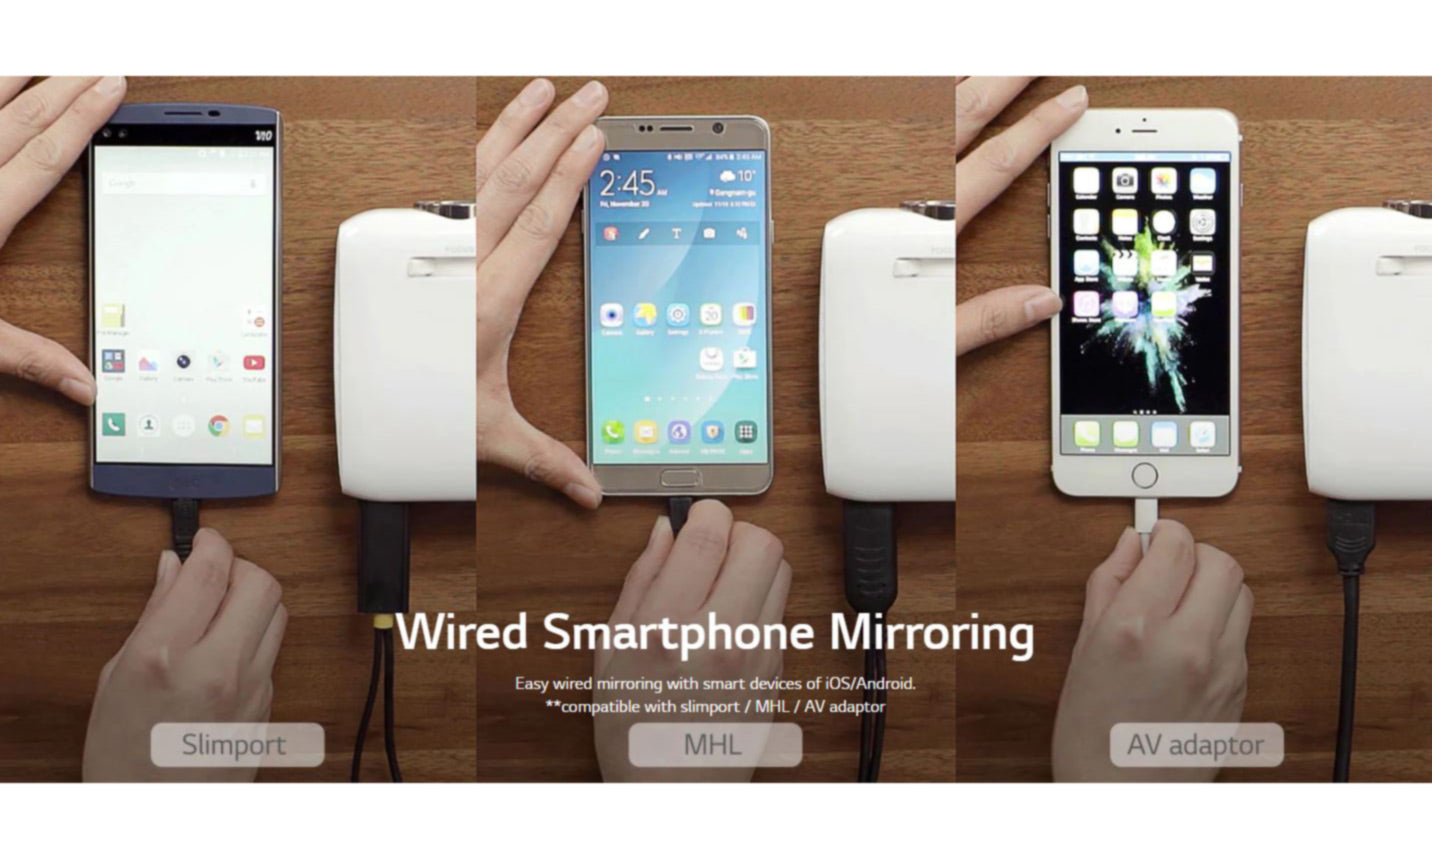 Wired Smartphone Mirroring